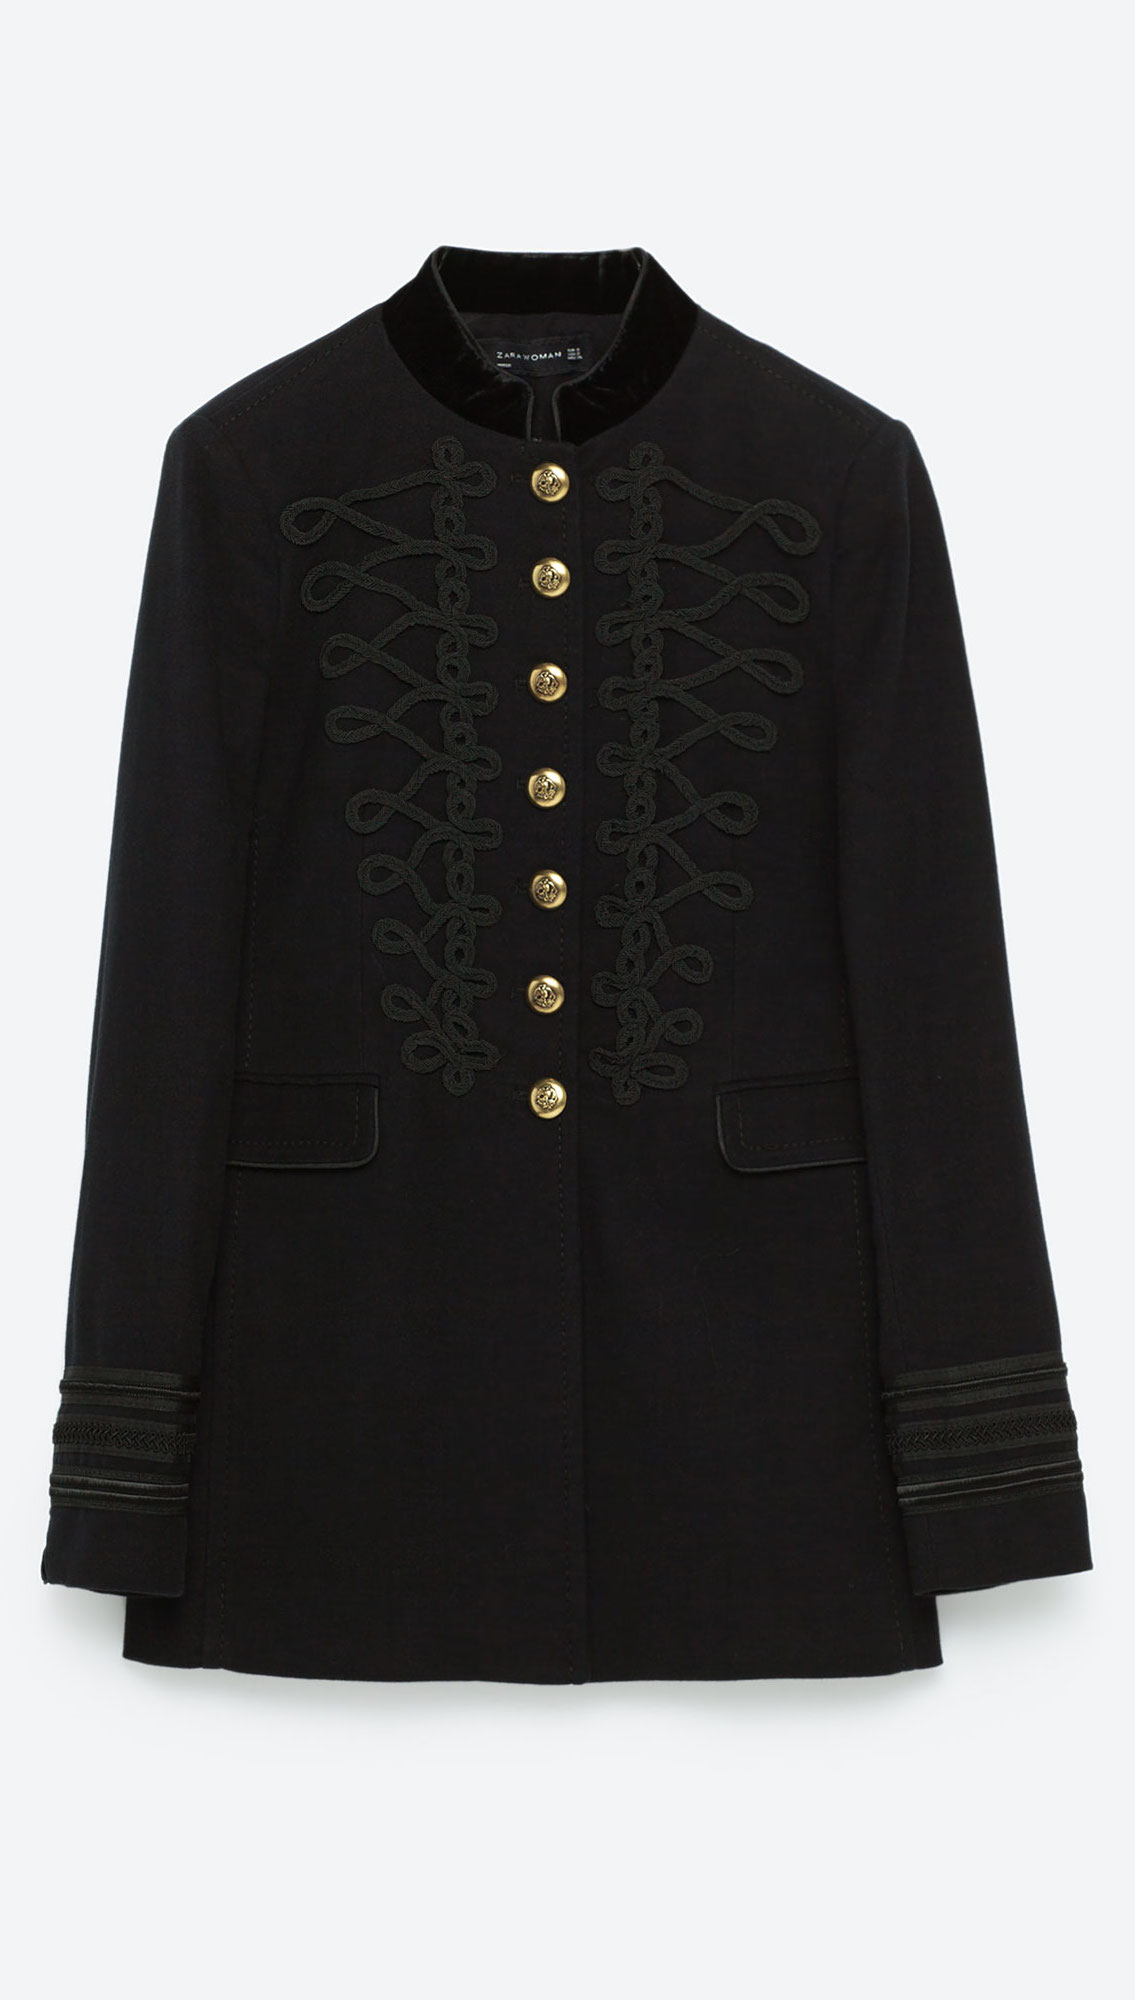 Zara Black Military Jacket